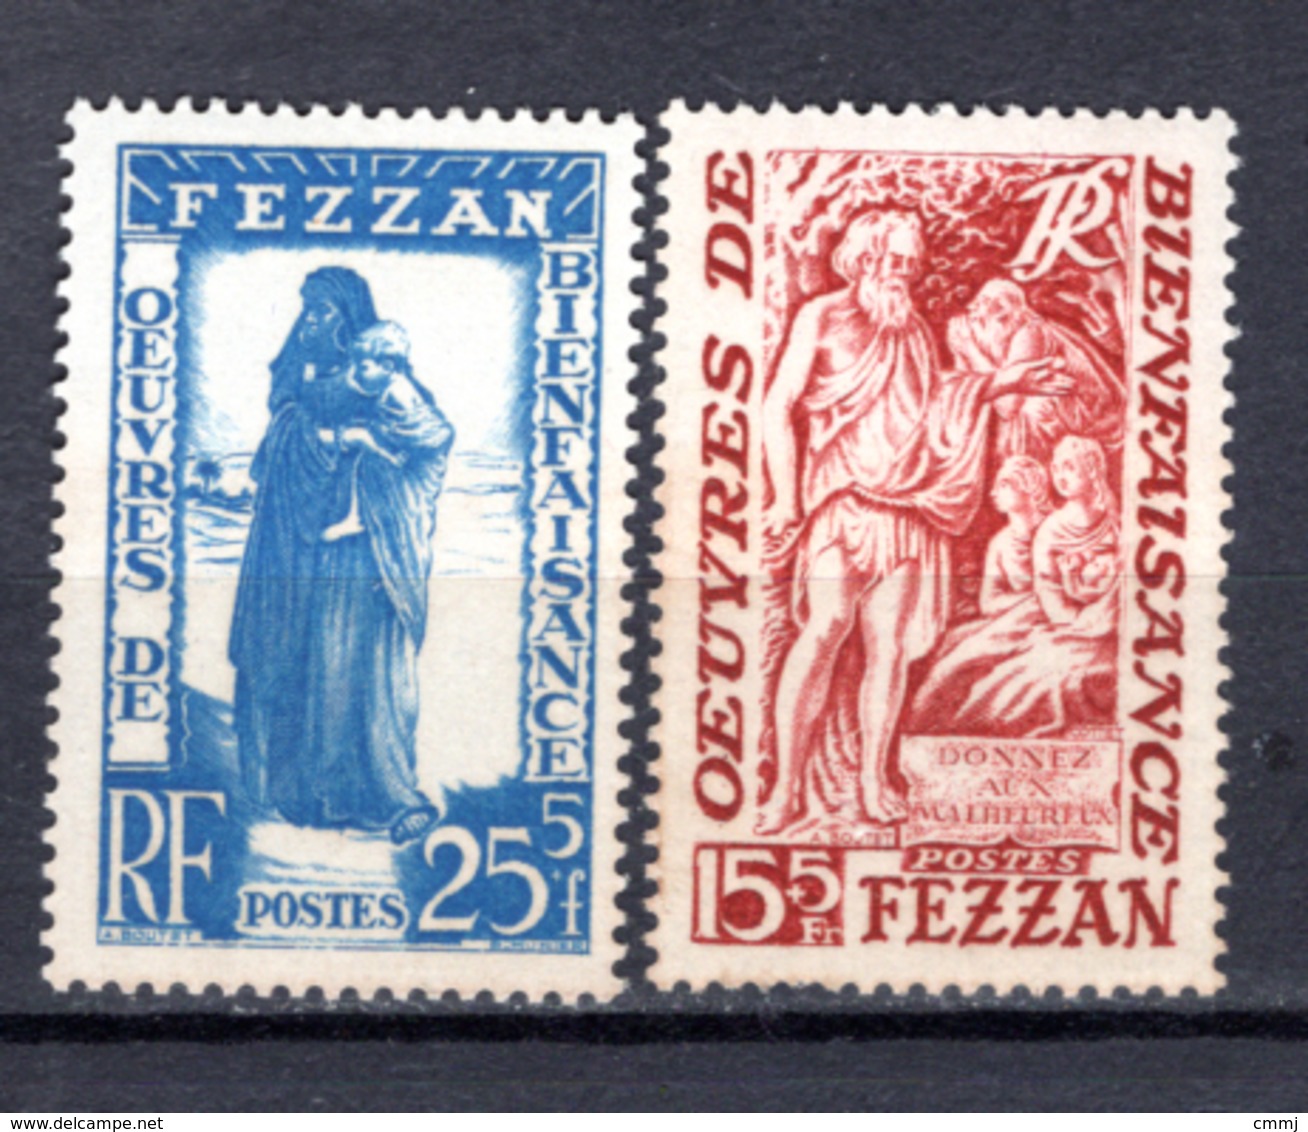 1950 - FEZZAN - Unif.  Nr. 54/55 - NH -  (W19022012.14.) - Fezzan & Ghadames